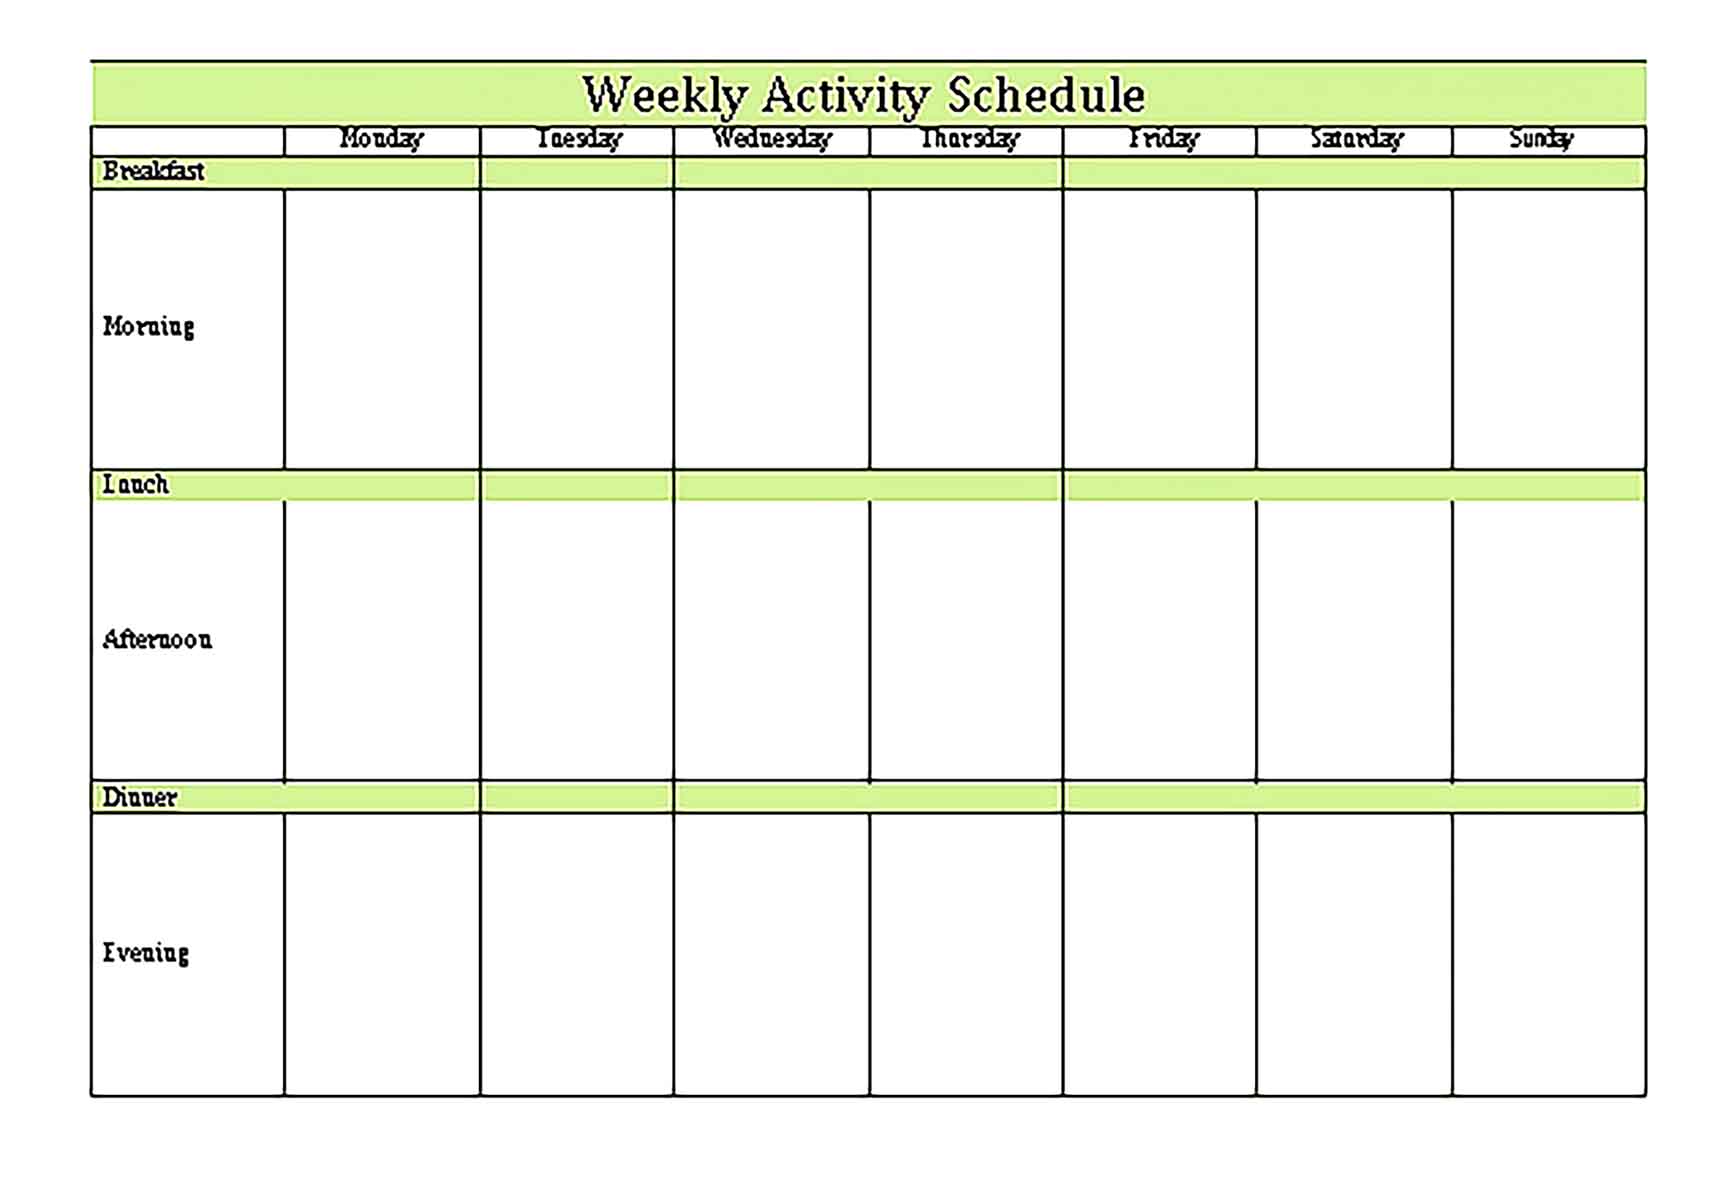 Template Patient Weekly Activity Schedule Sample